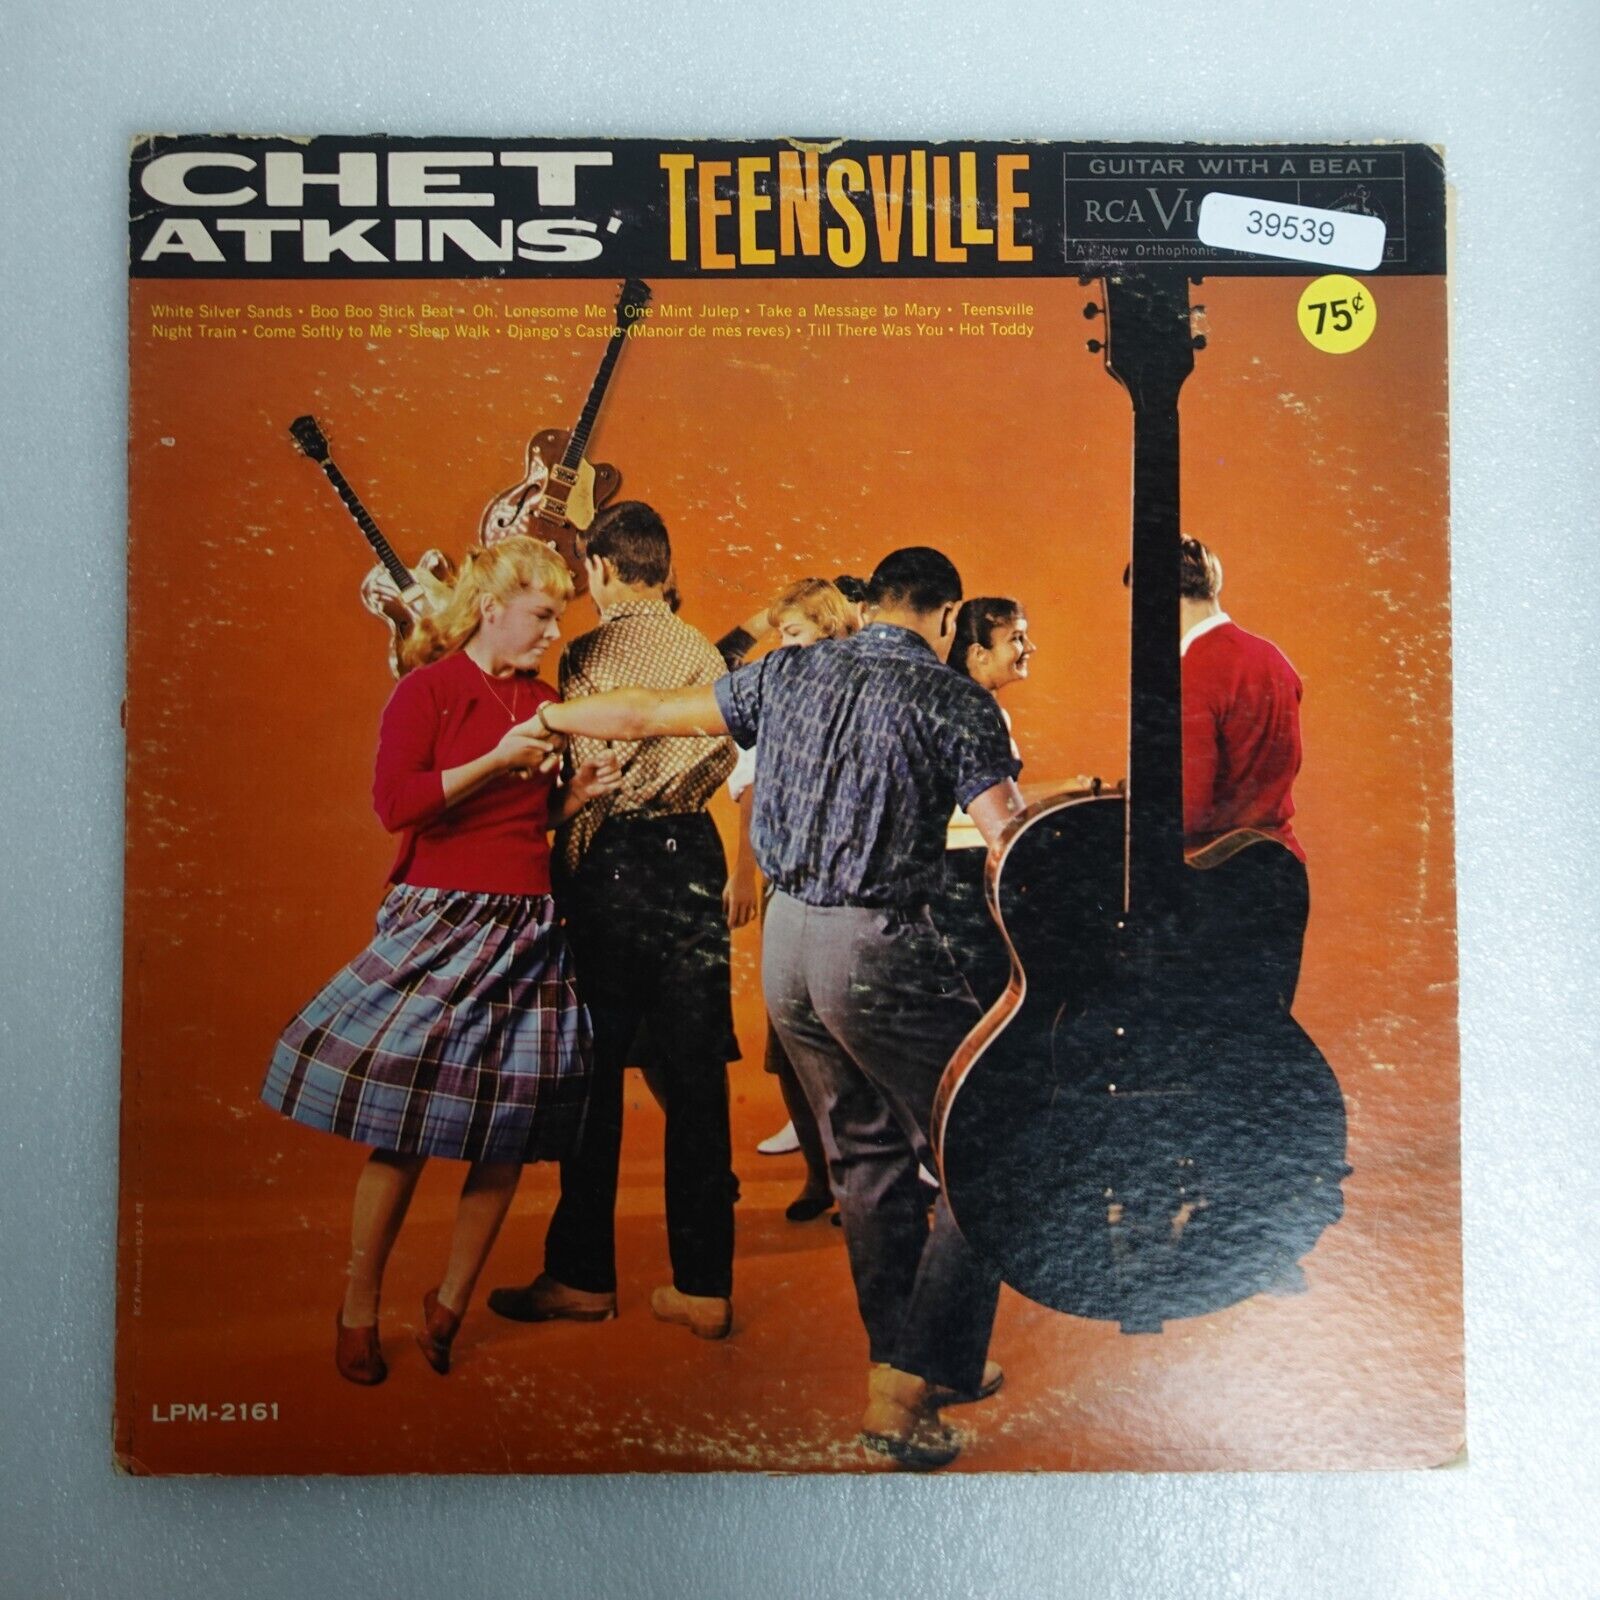 Chet Atkins Teensville LP Vinyl Record Album